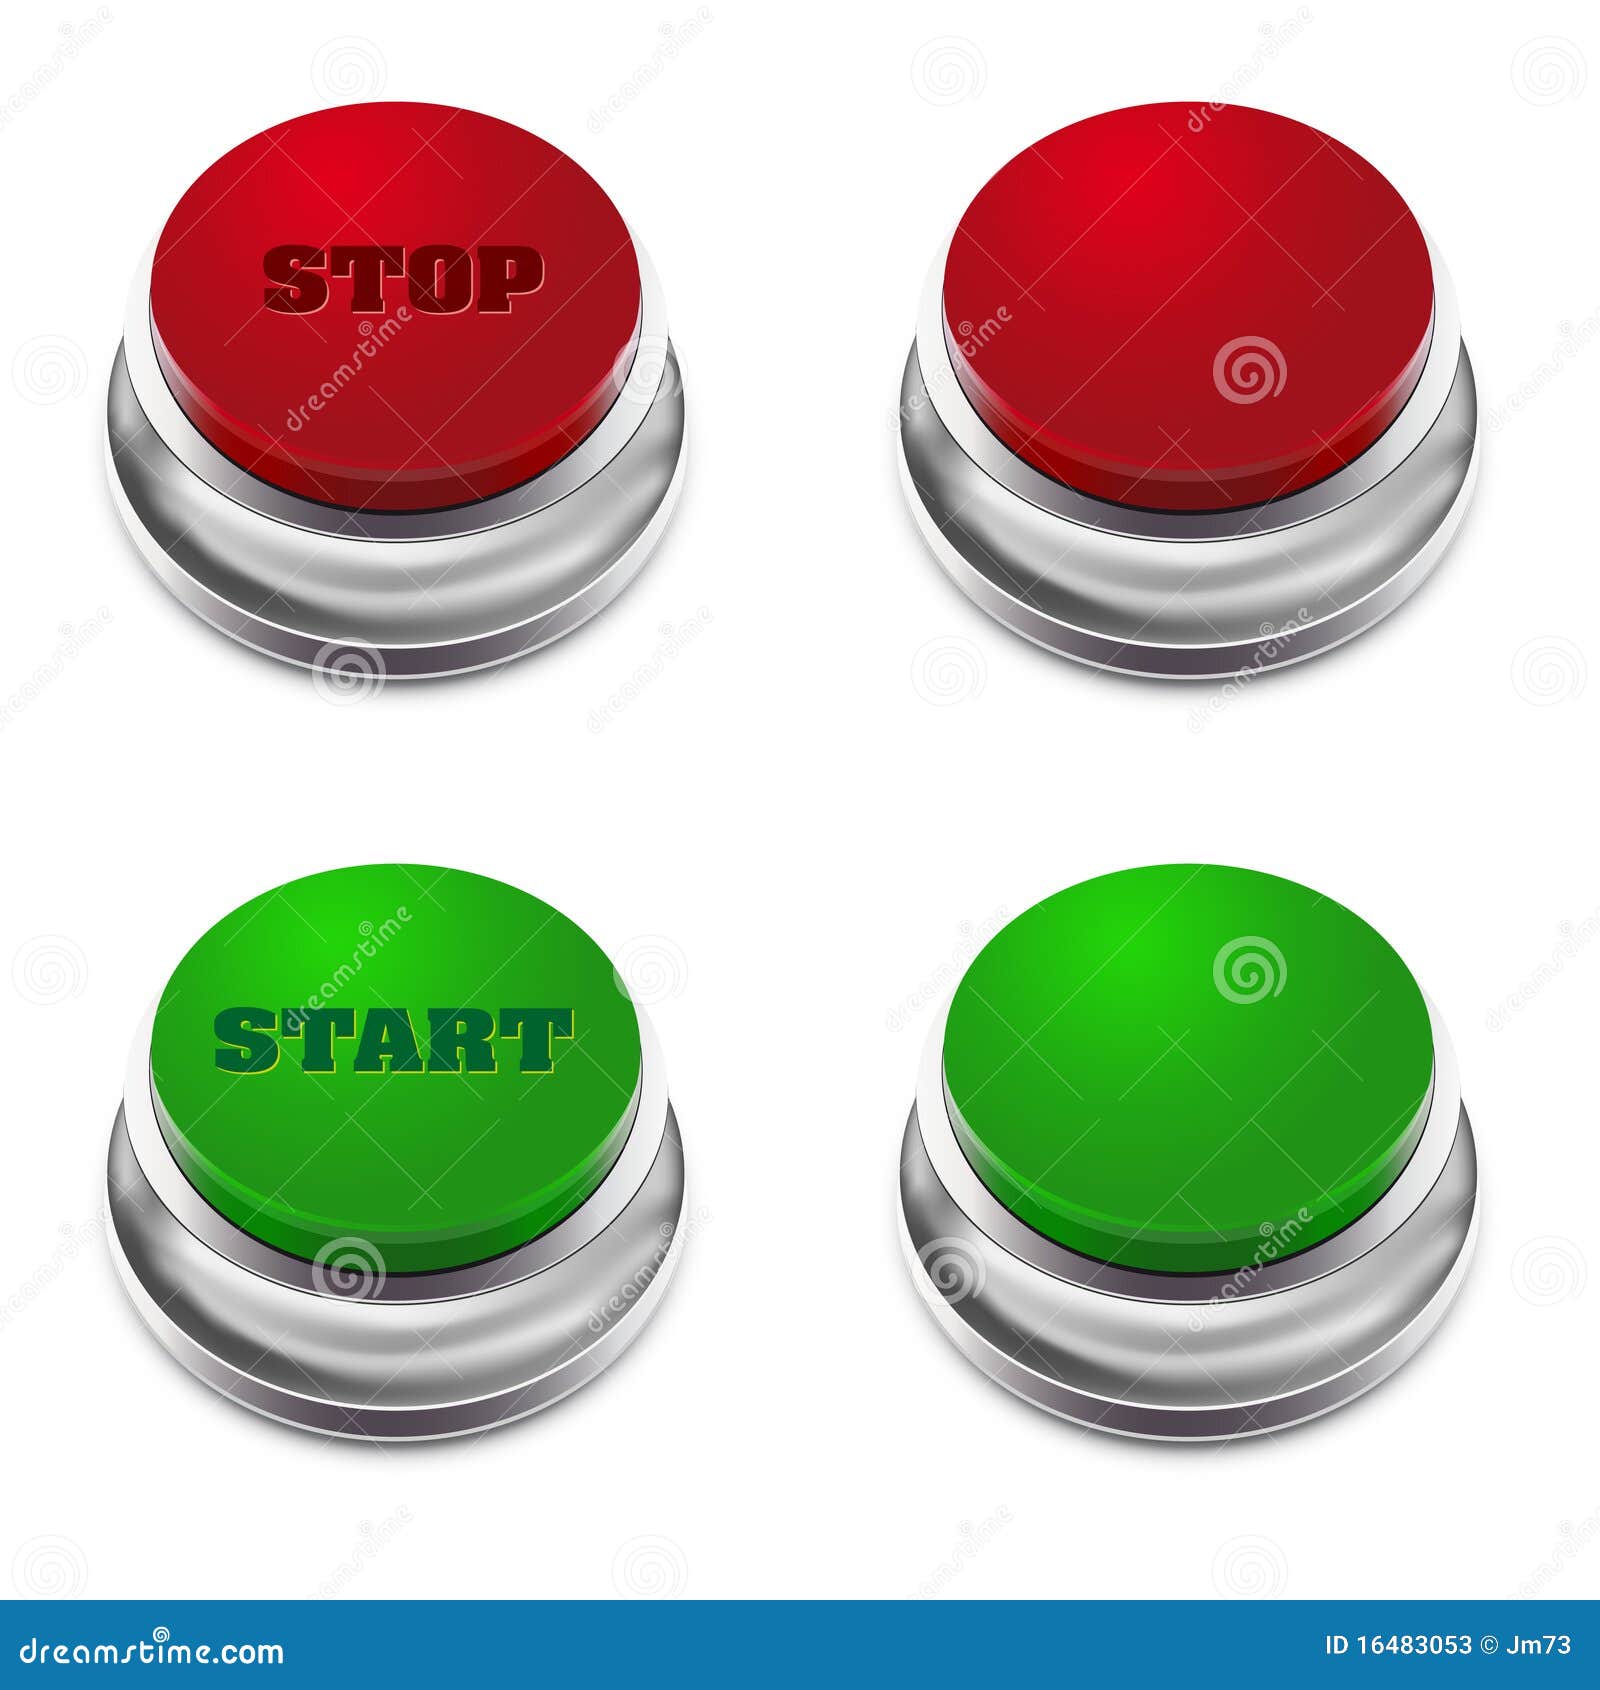 Кнопка пуск красная. Кнопка старт. Красная кнопка и зелёная кнопка. Красная кнопка старт. Красная кнопка пуск.